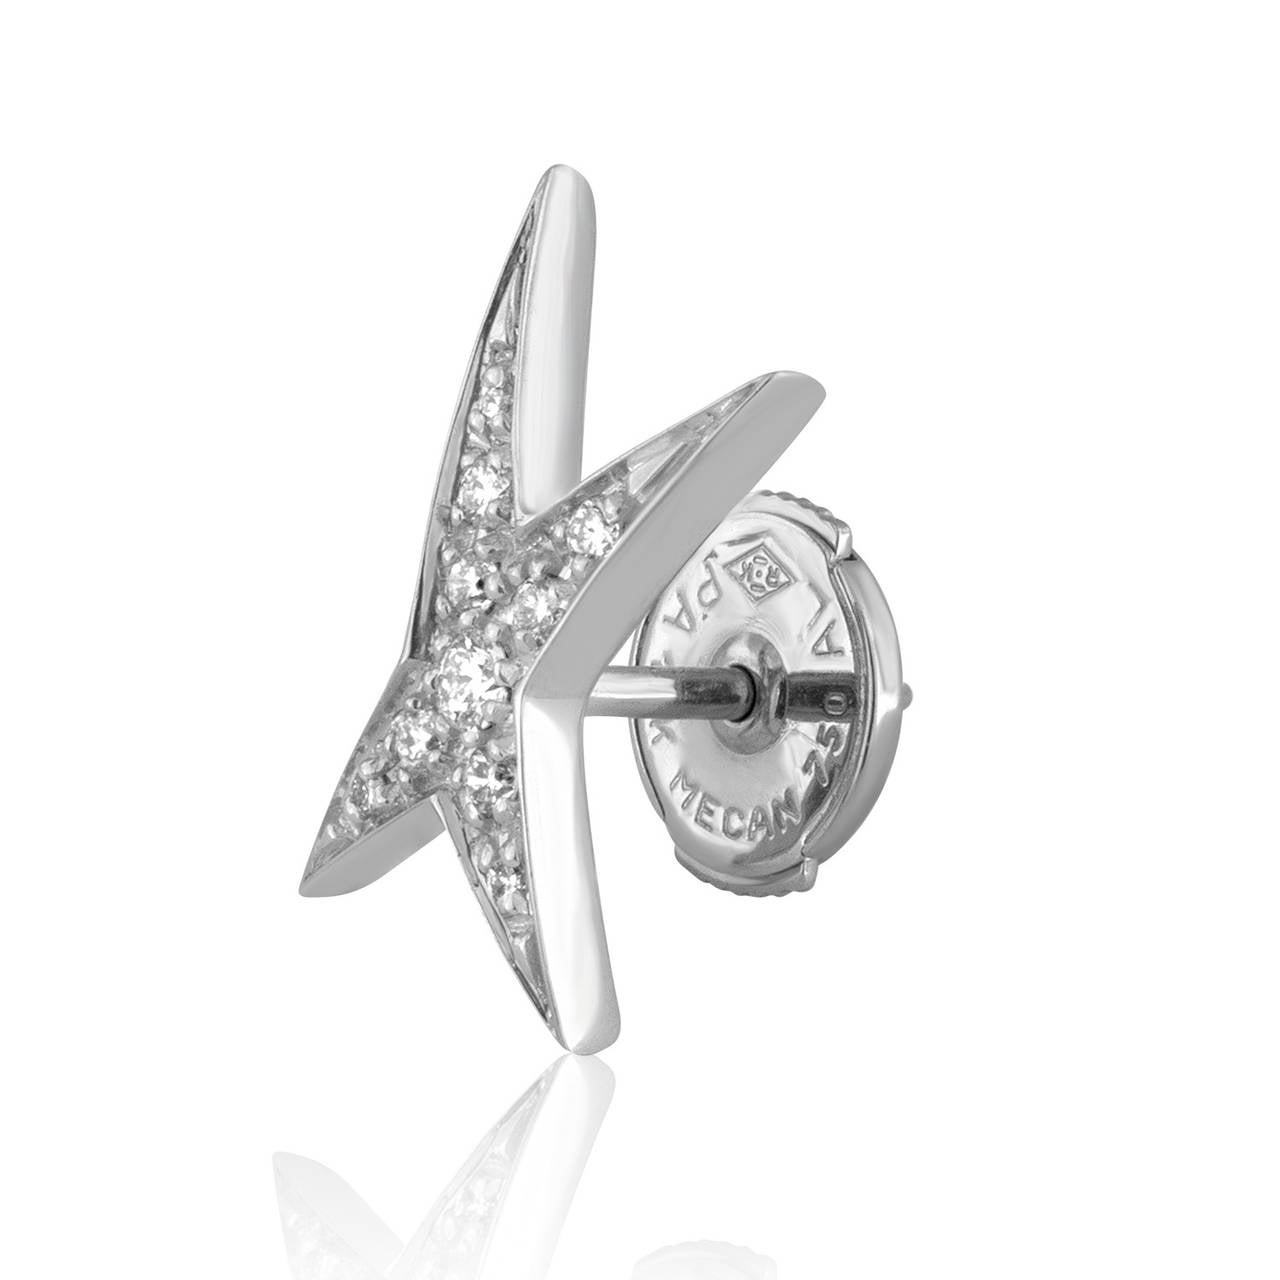 Maubboussin Etoile Earring star studs,
18K white gold, diamond pavé.
The earrings have 0.13ct F VS diamonds.
The earrings measure .50